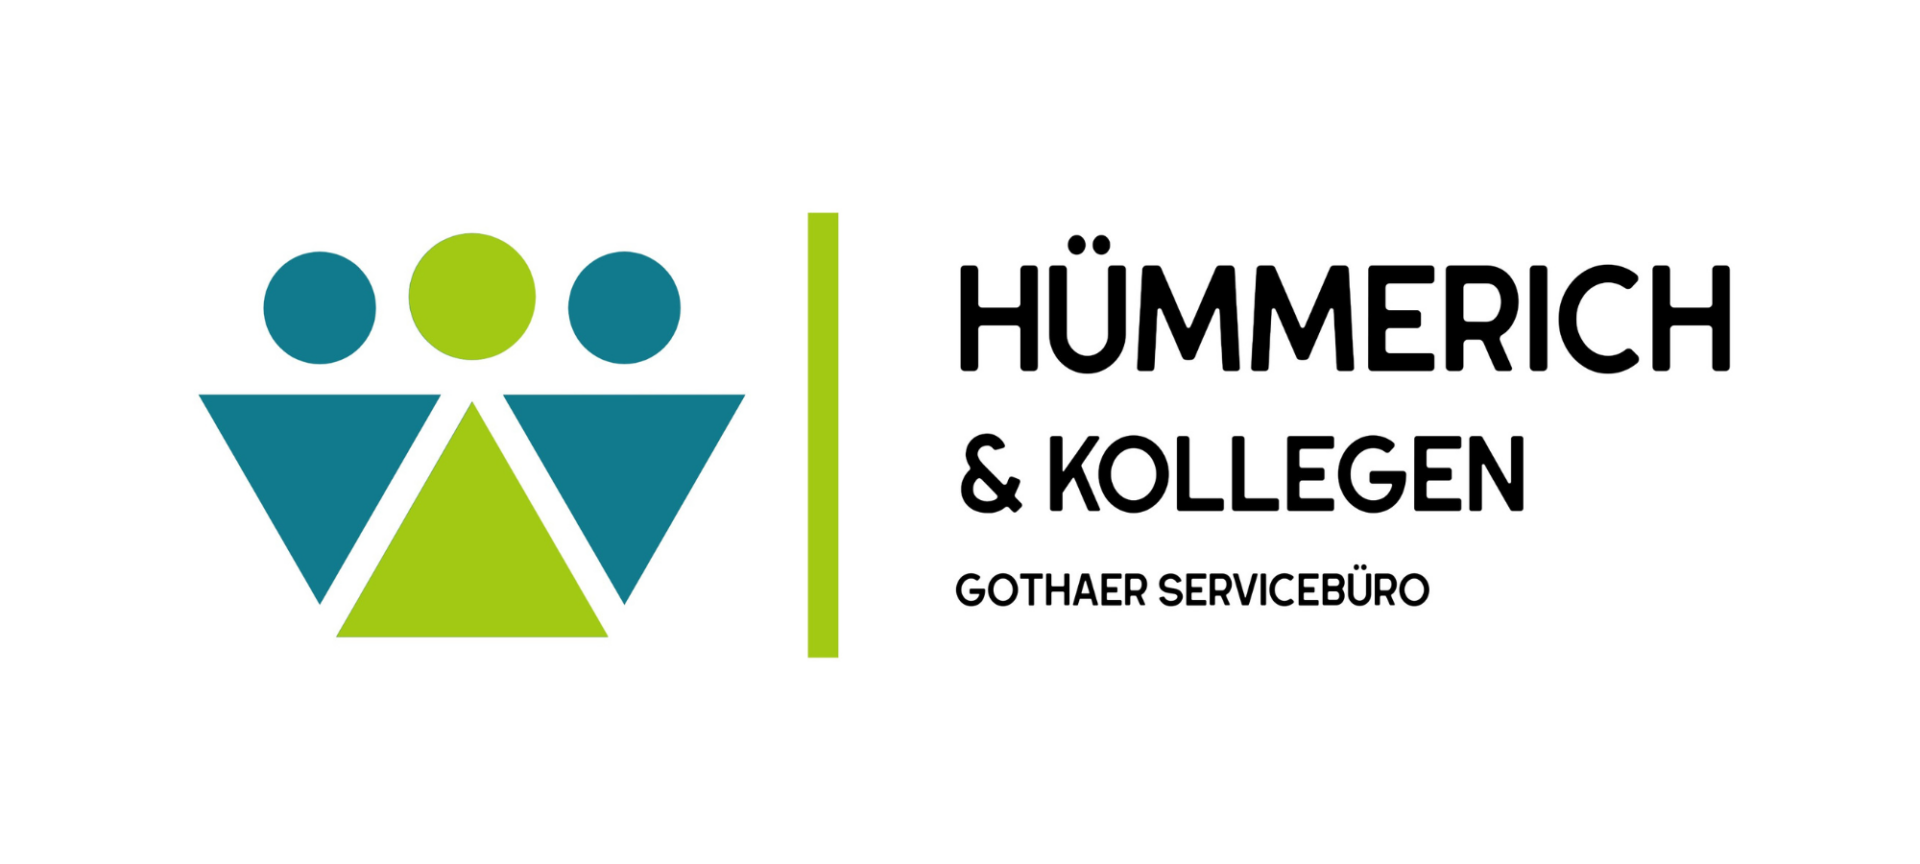 Hümmerich Kollegen gothaer koblenz Versicherung logo